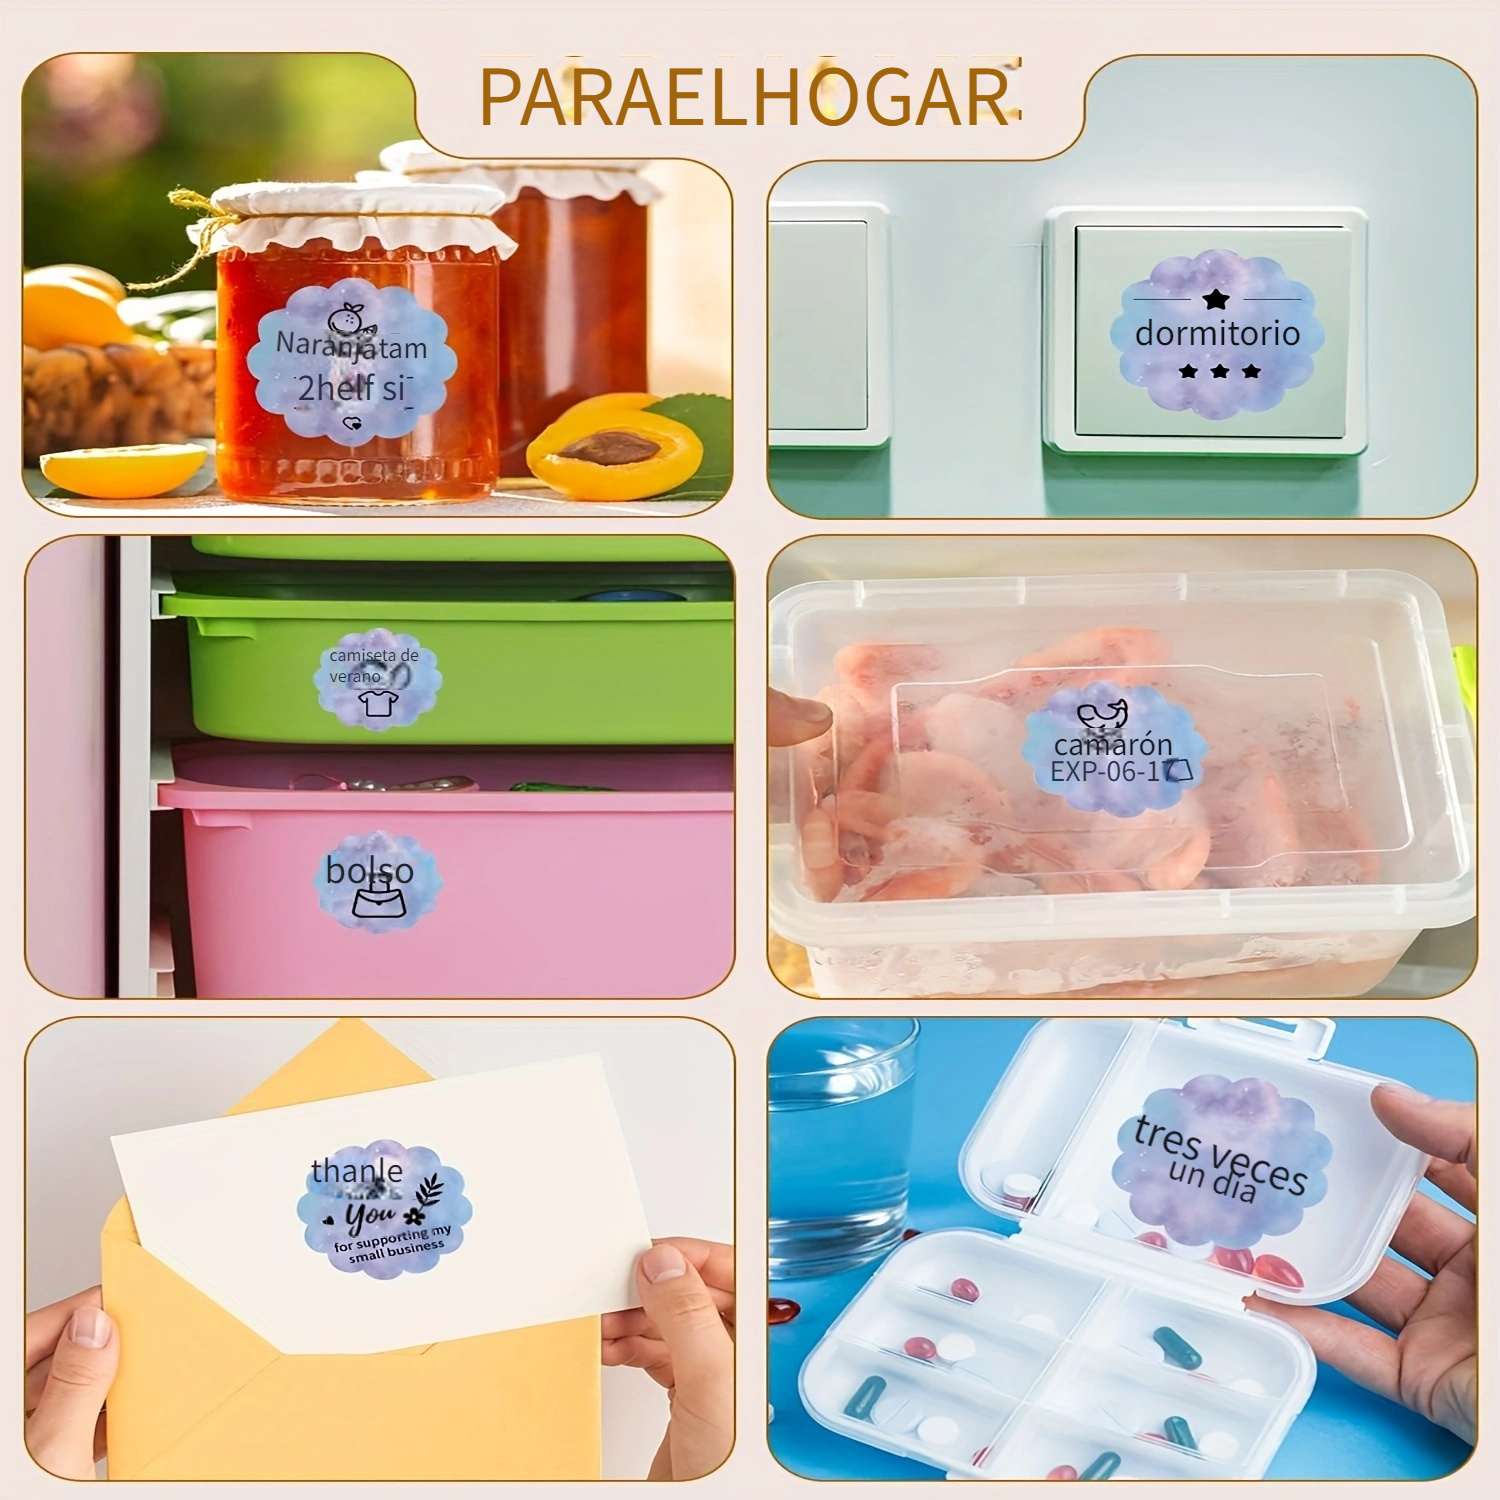 Tradineur - Pack de 420 etiquetas adhesivas redondas blancas E16C, pegatinas  auto-adhesivas para objetos, hogar, oficina, Ø13 x